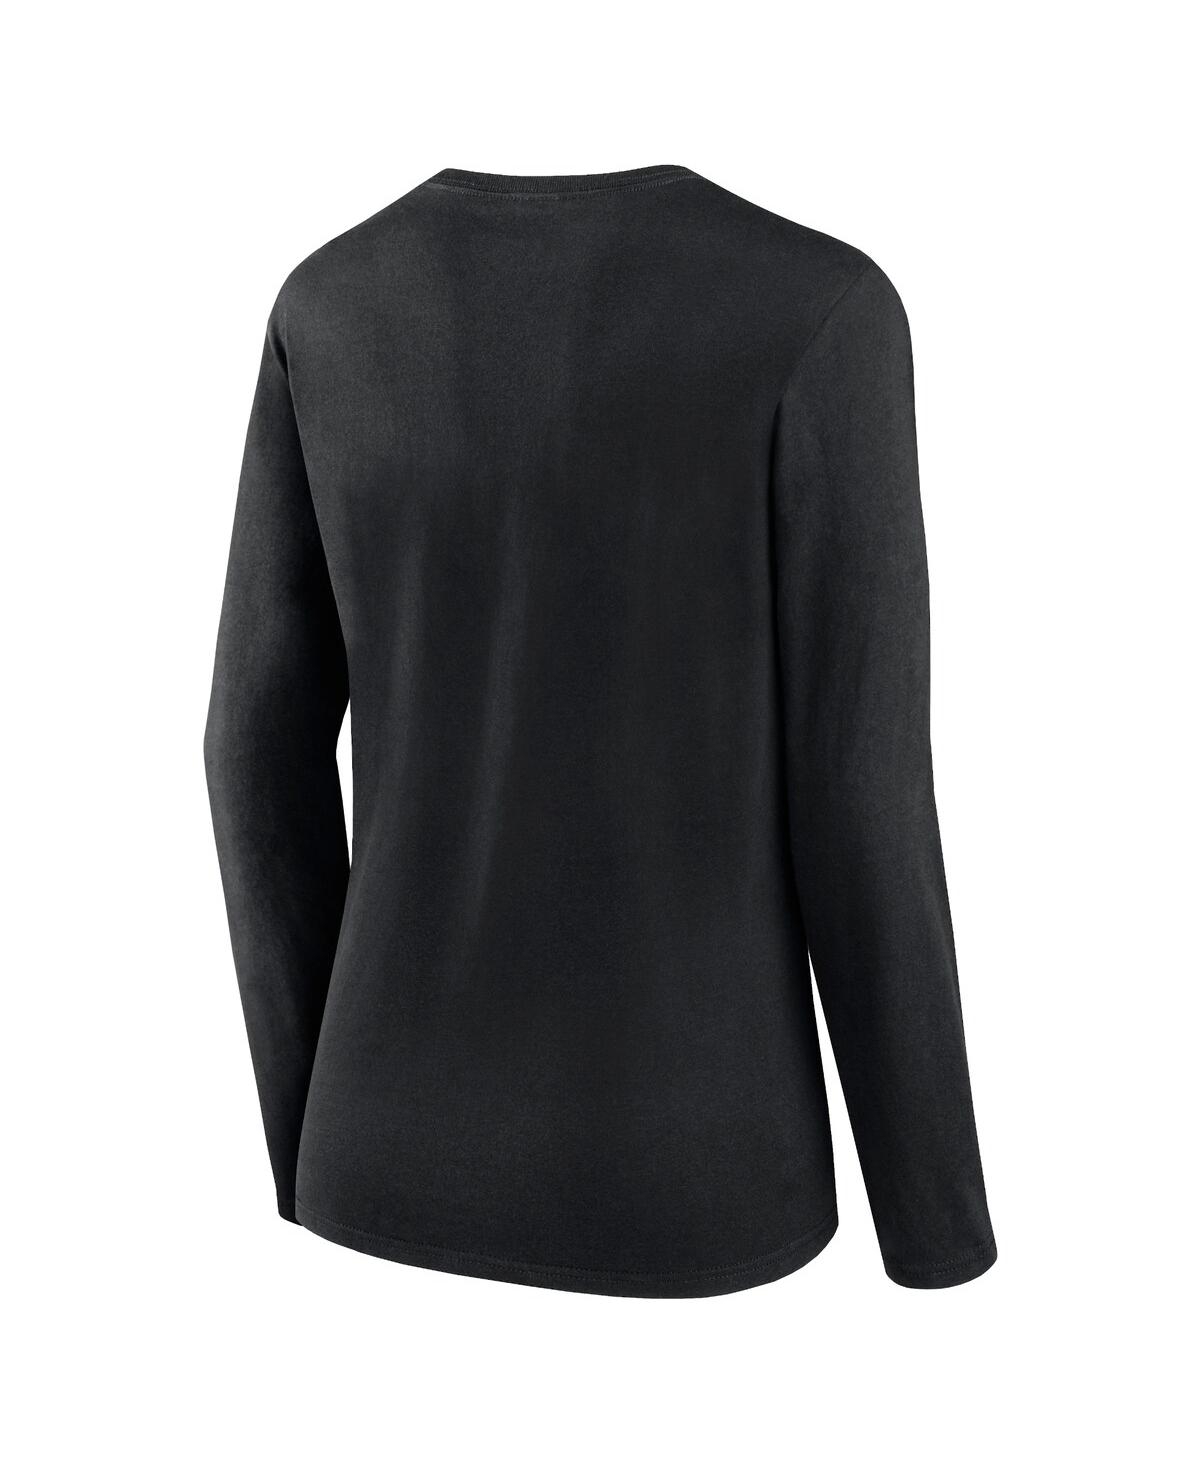 Shop Fanatics Women's  Black Pittsburgh Steelers Plus Size Foiled Play Long Sleeve T-shirt